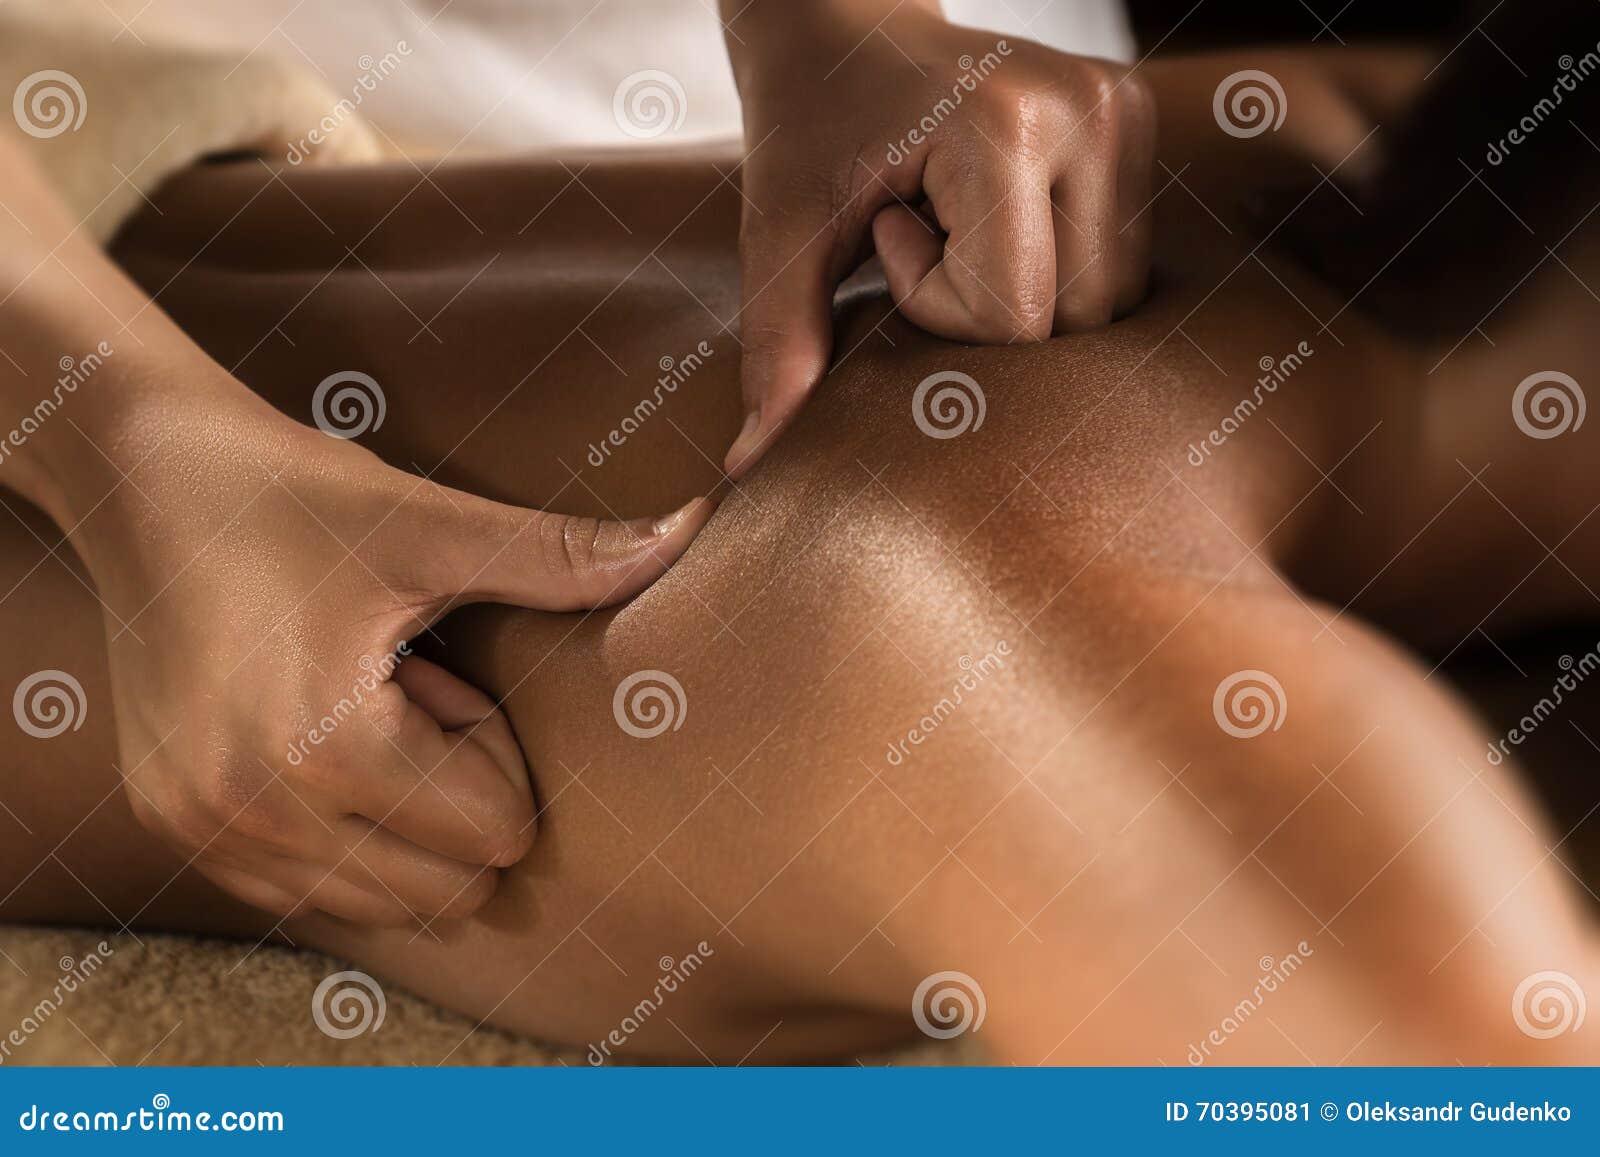 deep tissue massage close up